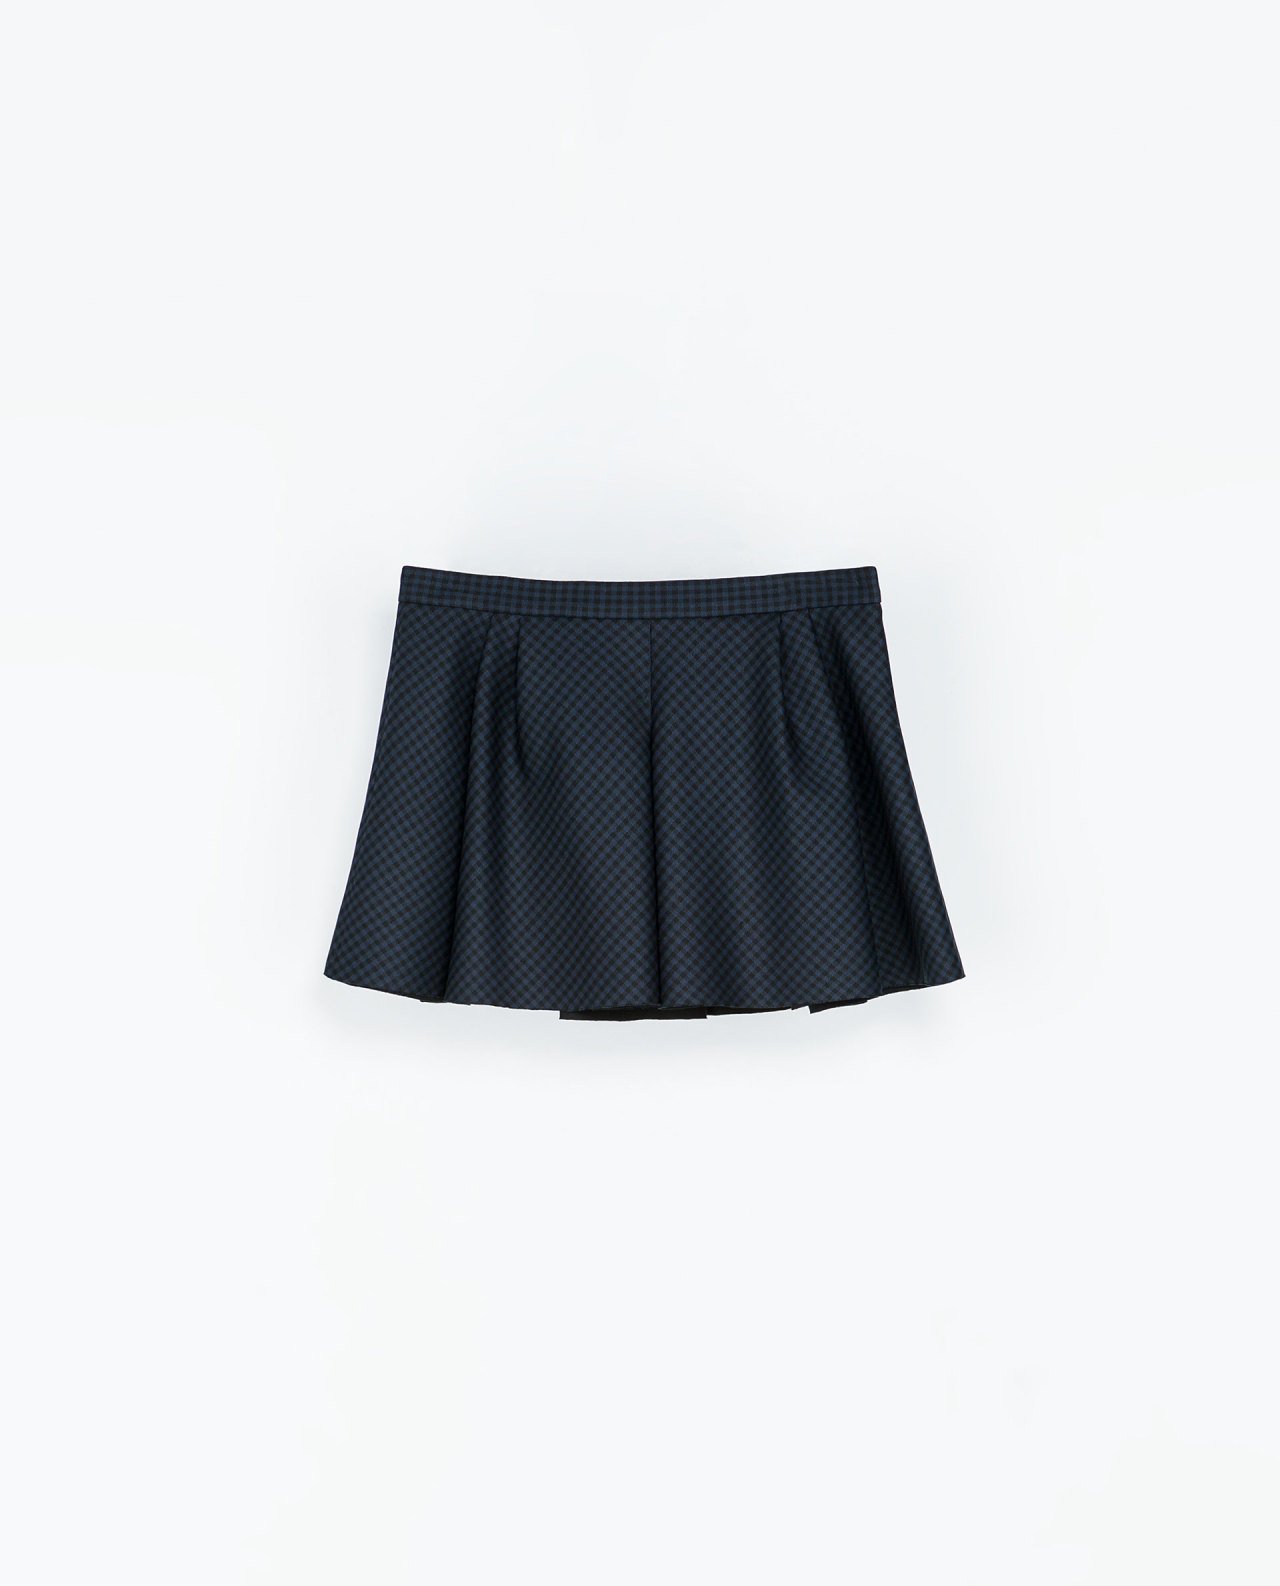 Zara Studio Box Pleat Mini Skirt.jpg